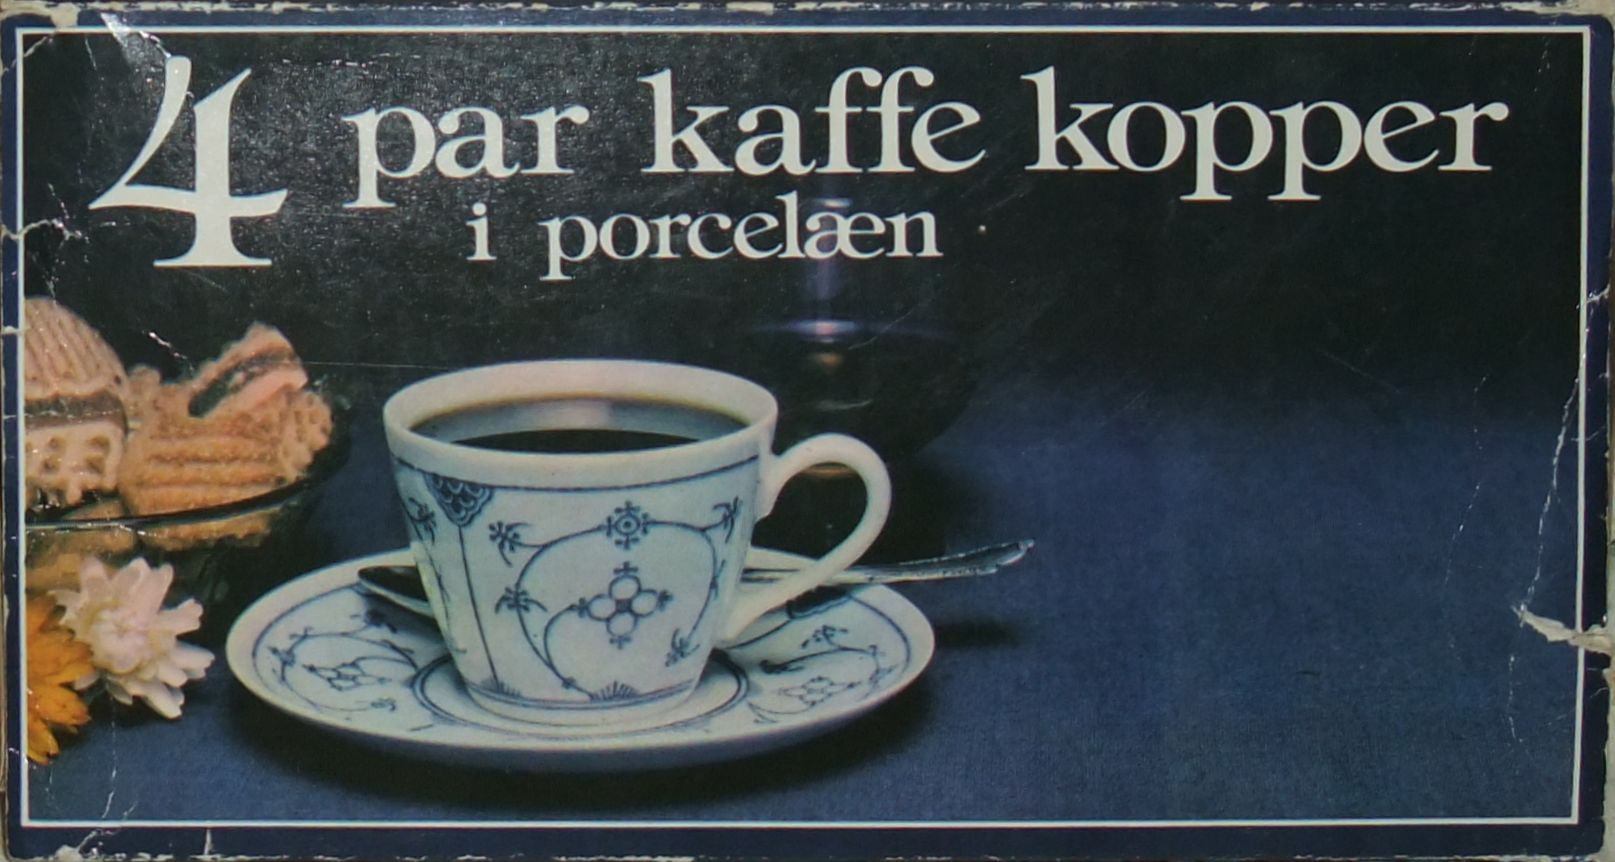 Originalverpackung für den Dänischen Markt (1980er): Jäger Eisenberg DDR • 4 par kaffe kopper i porcelæn • TÅLER MASKINOPVASK